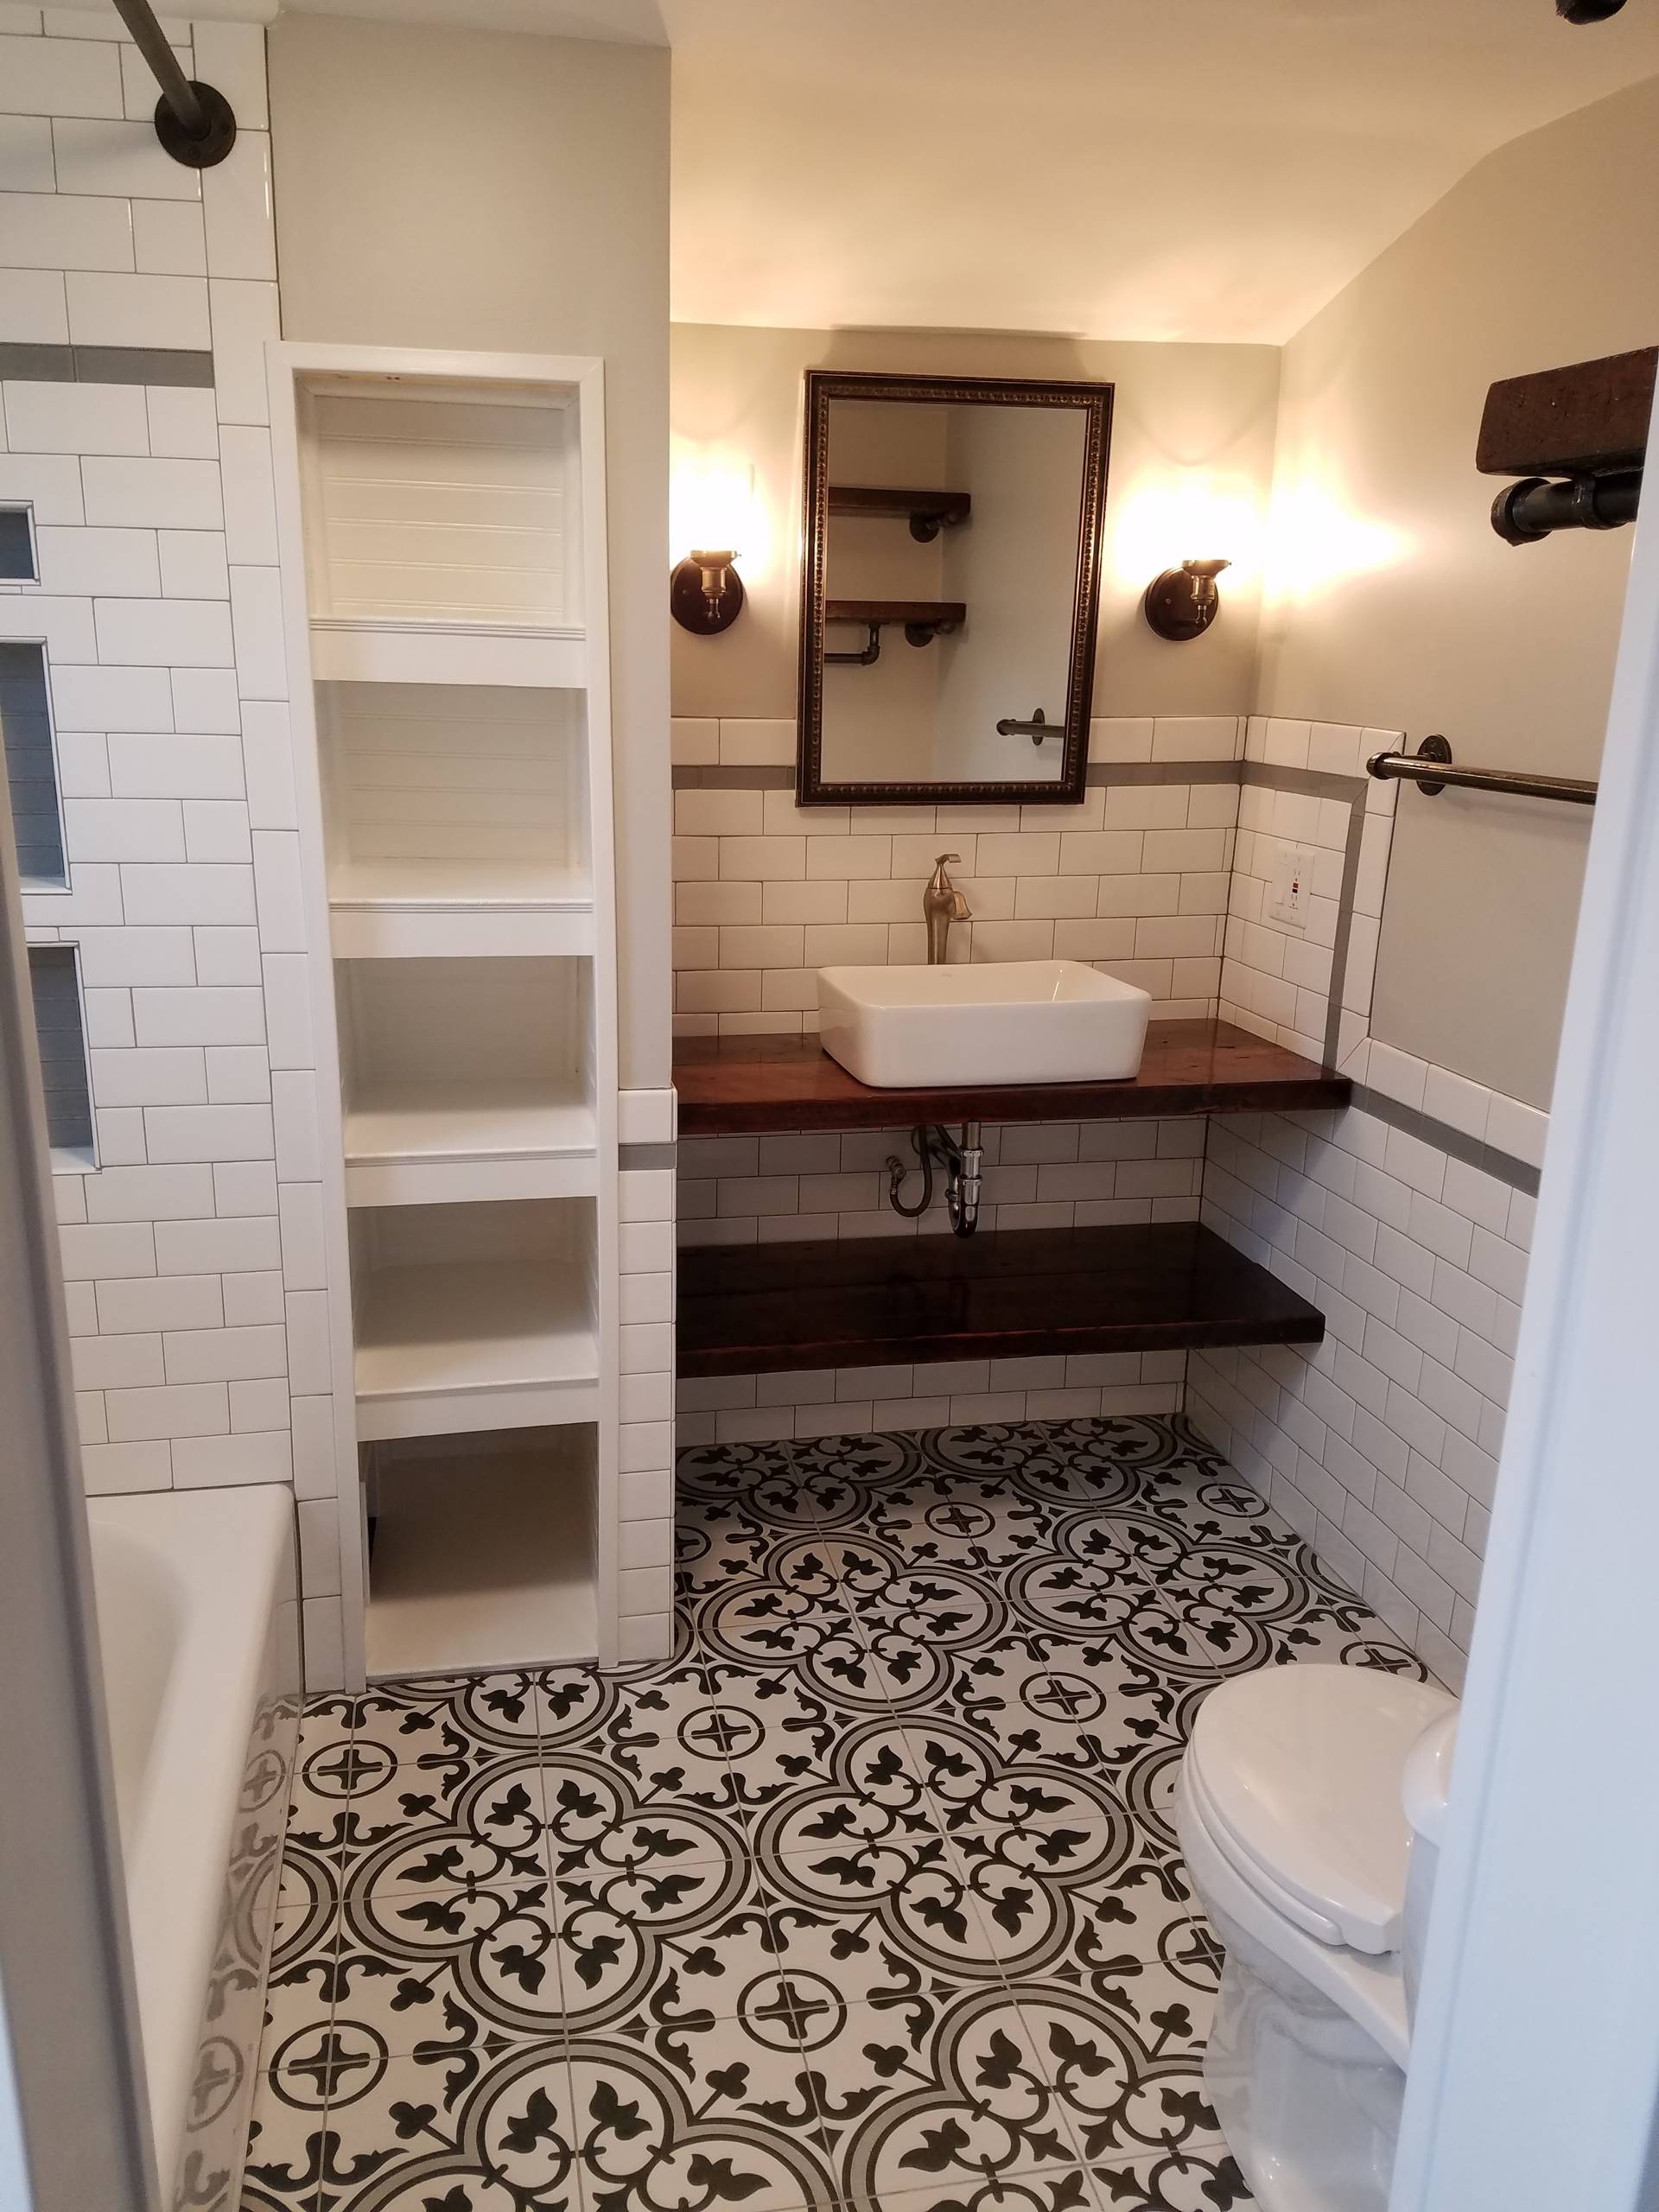 6 Black and White Bathroom Floor Tiles That Feel Totally Fresh  Black and  white bathroom floor, Farmhouse bathroom decor, Bathroom design